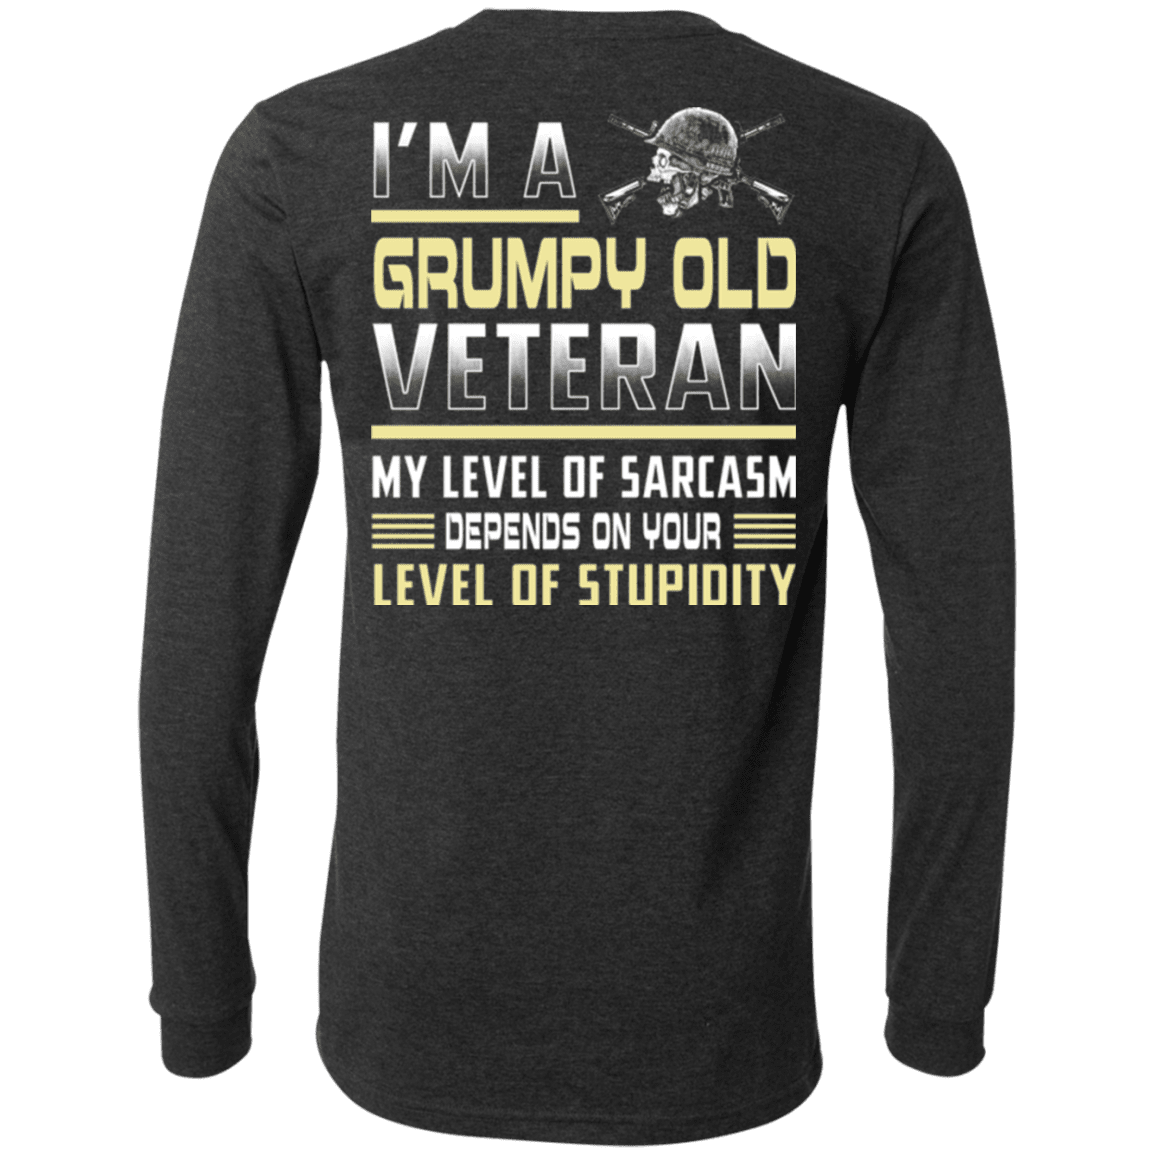 Military T-Shirt "I'm A Grumpy Old Veteran" - Men Back-TShirt-General-Veterans Nation